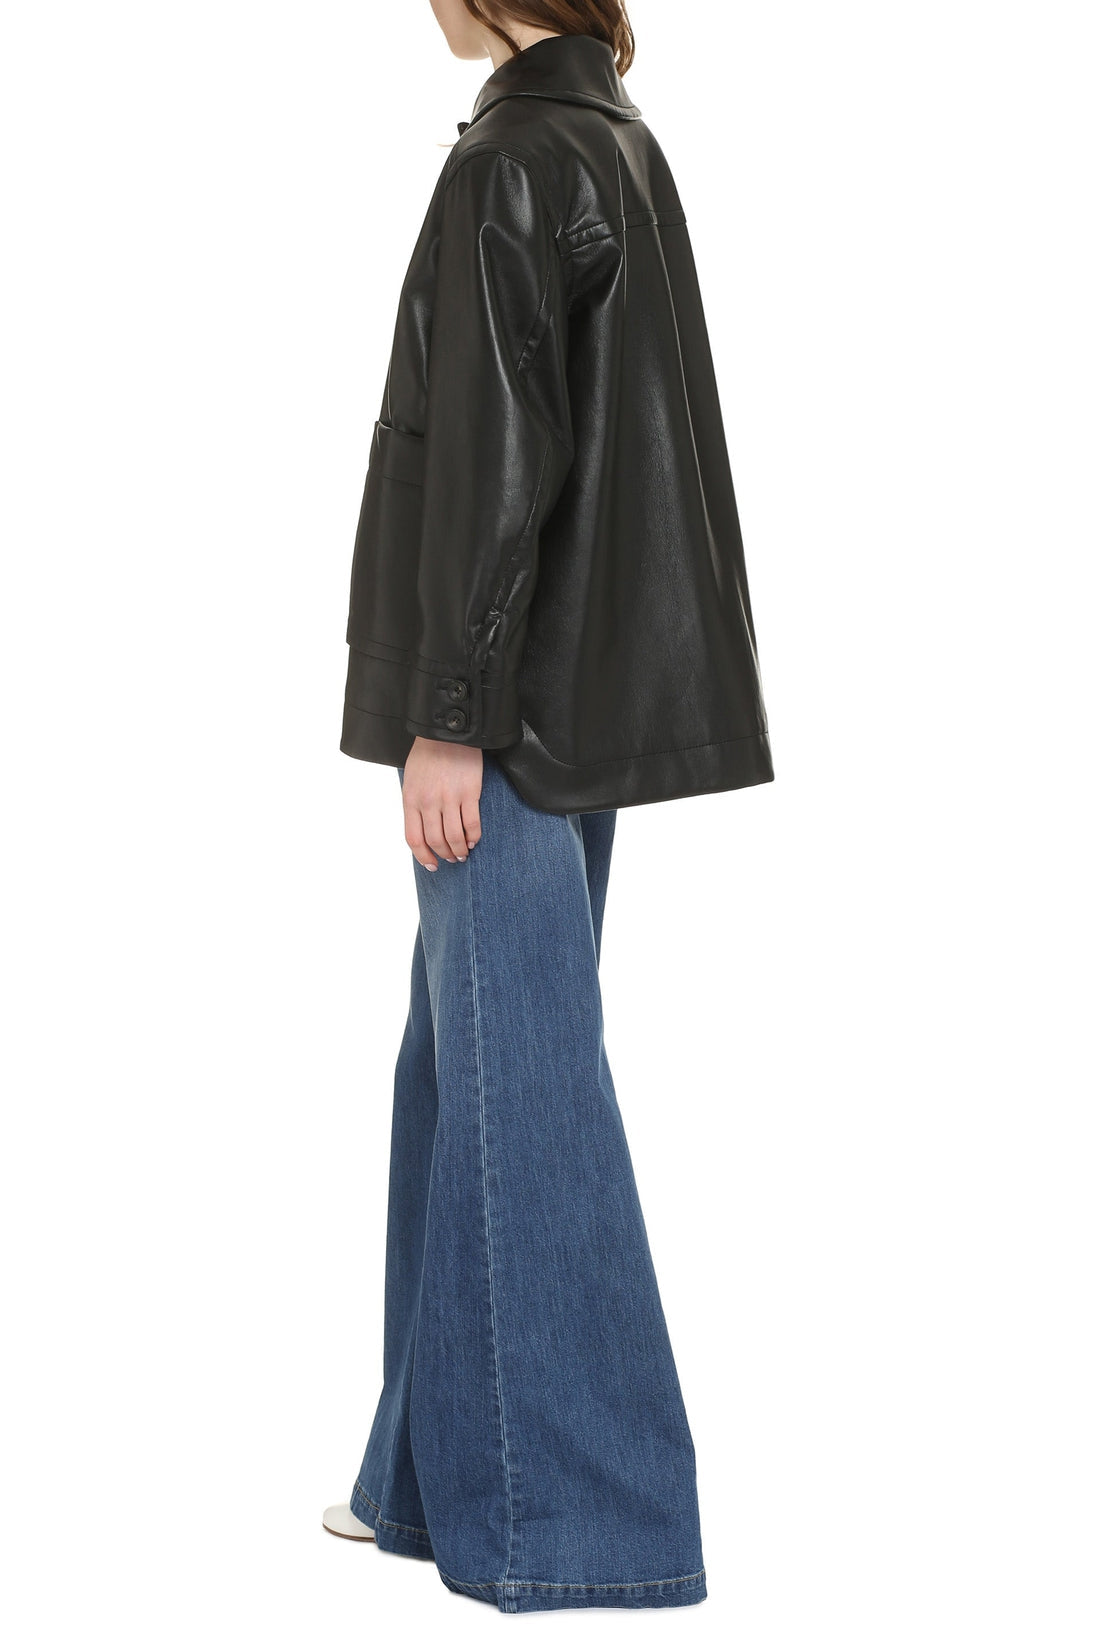 Rodebjer-OUTLET-SALE-Angelica Vegan leather jacket-ARCHIVIST